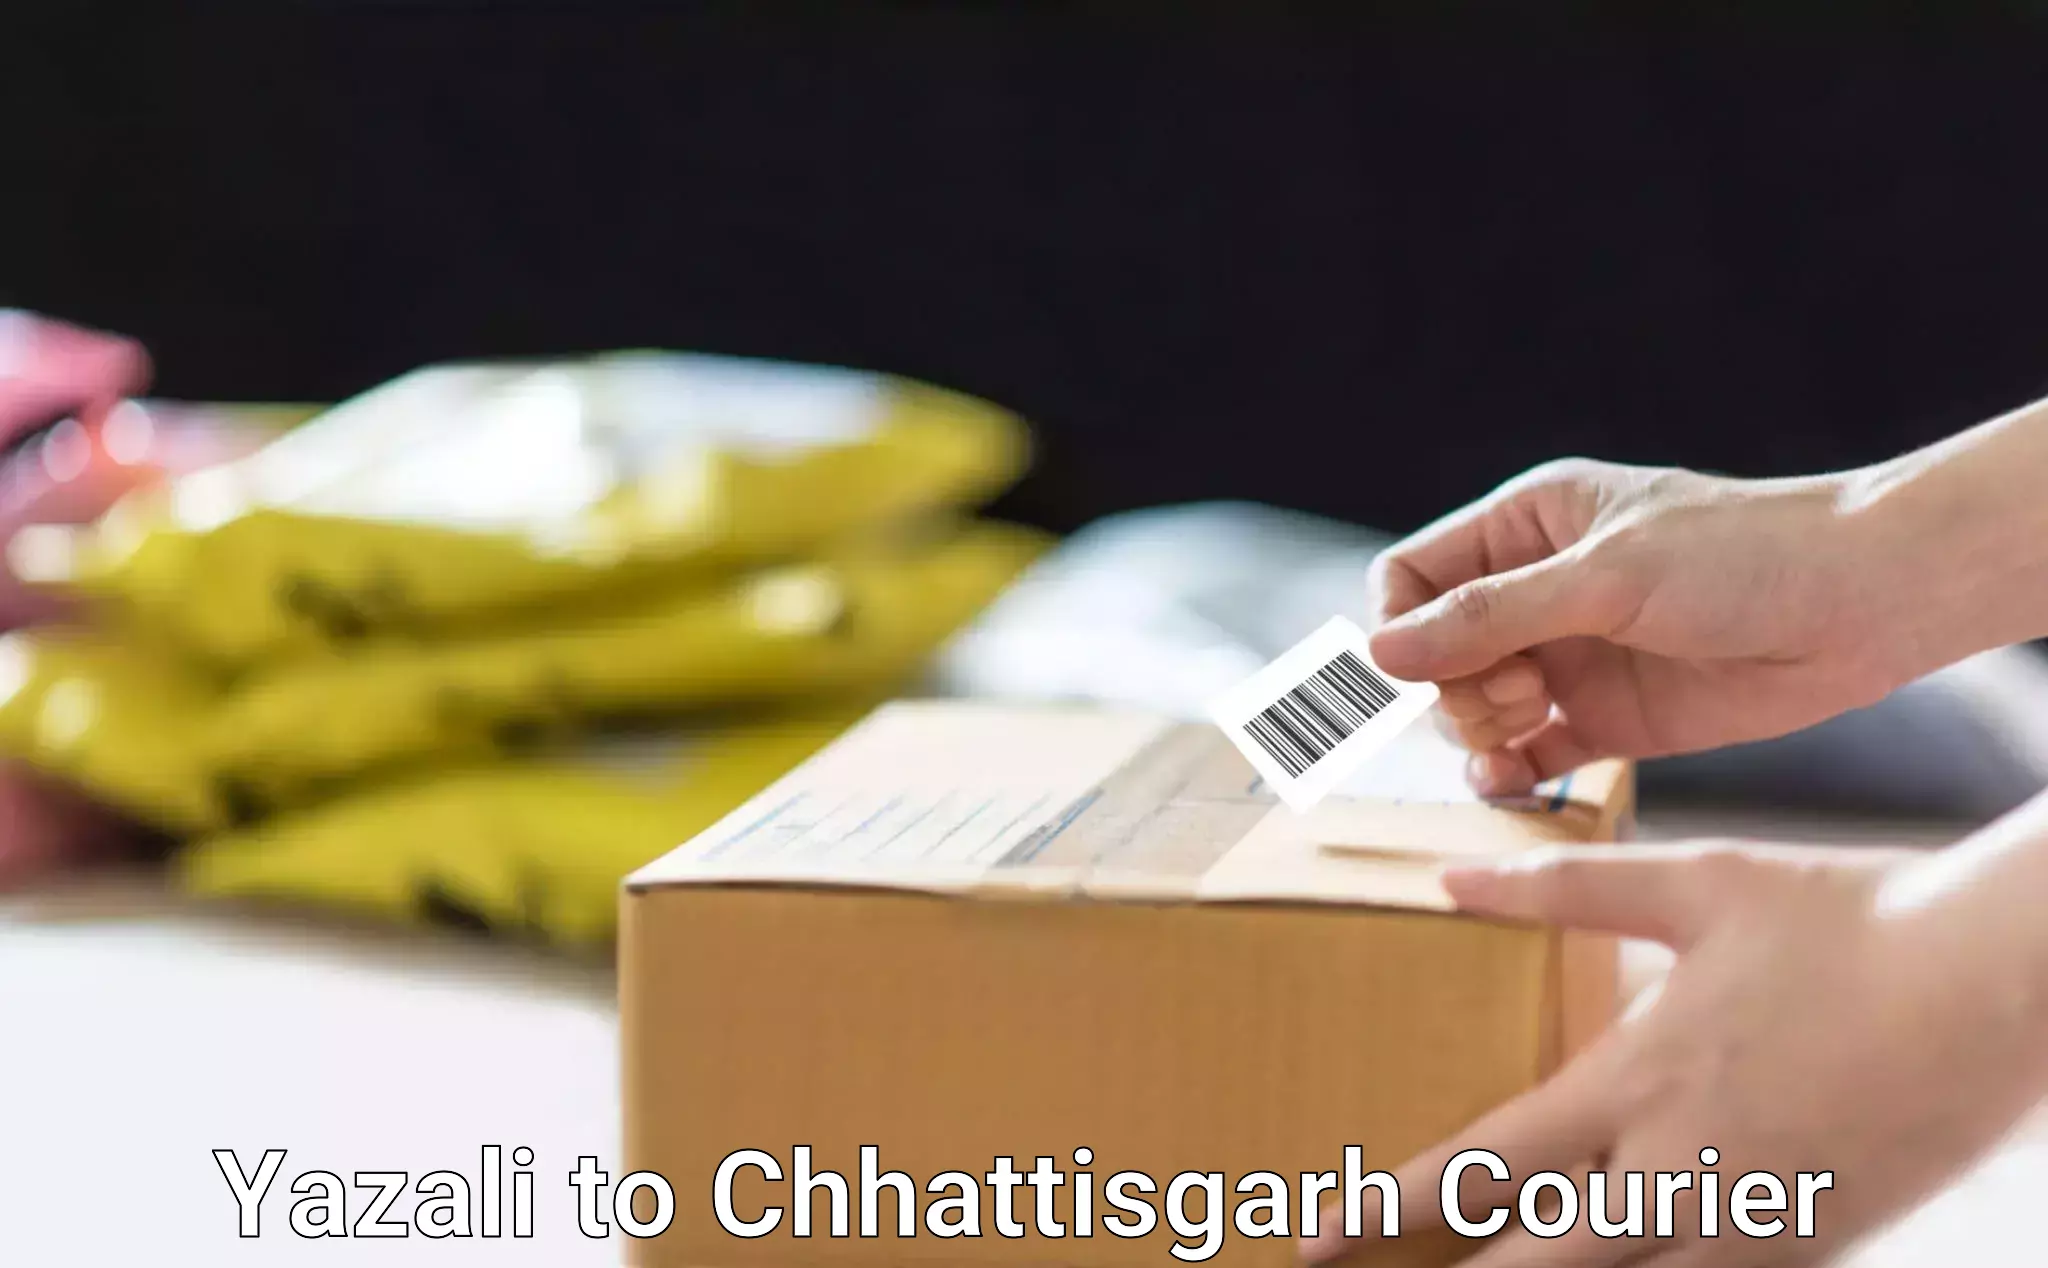 Courier service partnerships in Yazali to Bijapur Chhattisgarh